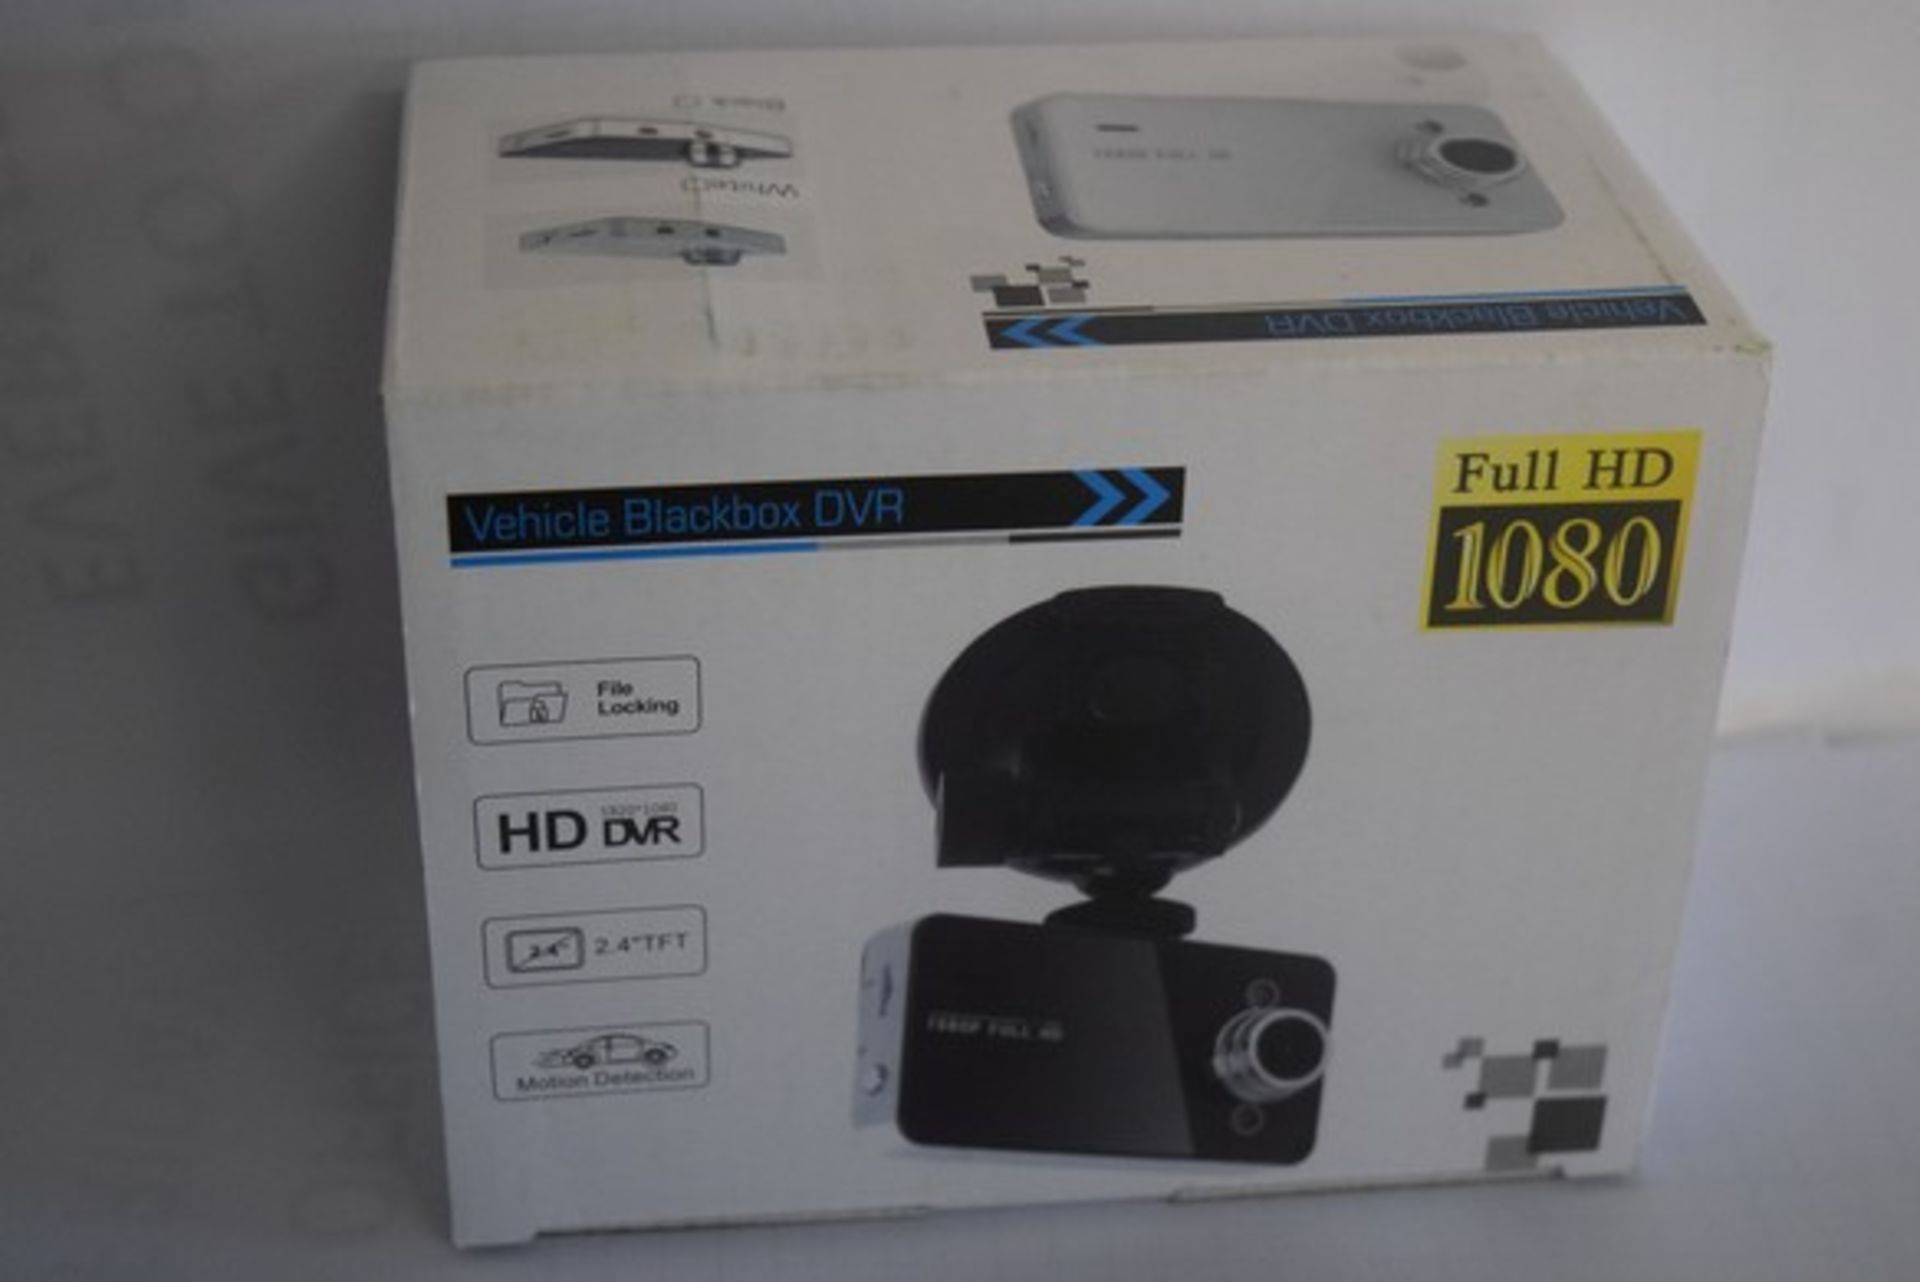 1 x BOXED BRAND NEW K6000 VEHICLE BLACK BOX FULL HD 1080 DVR VEHICLE CAMERA WITH 2.4" SCREEN, 140 A+